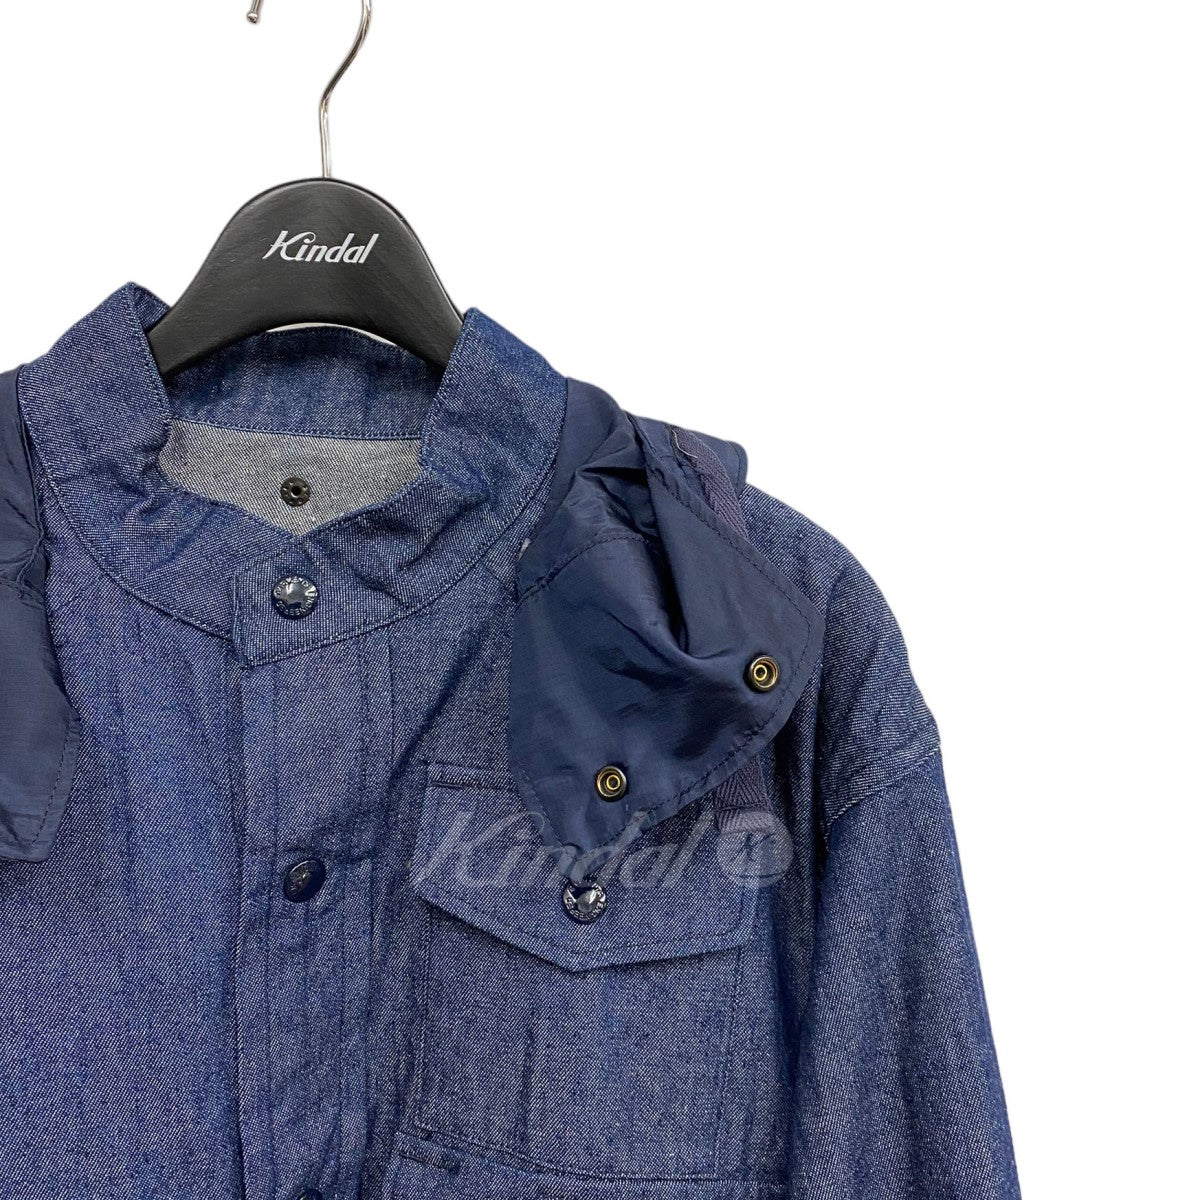 Engineered Garments(エンジニアードガーメンツ) cruiser jacket denim 